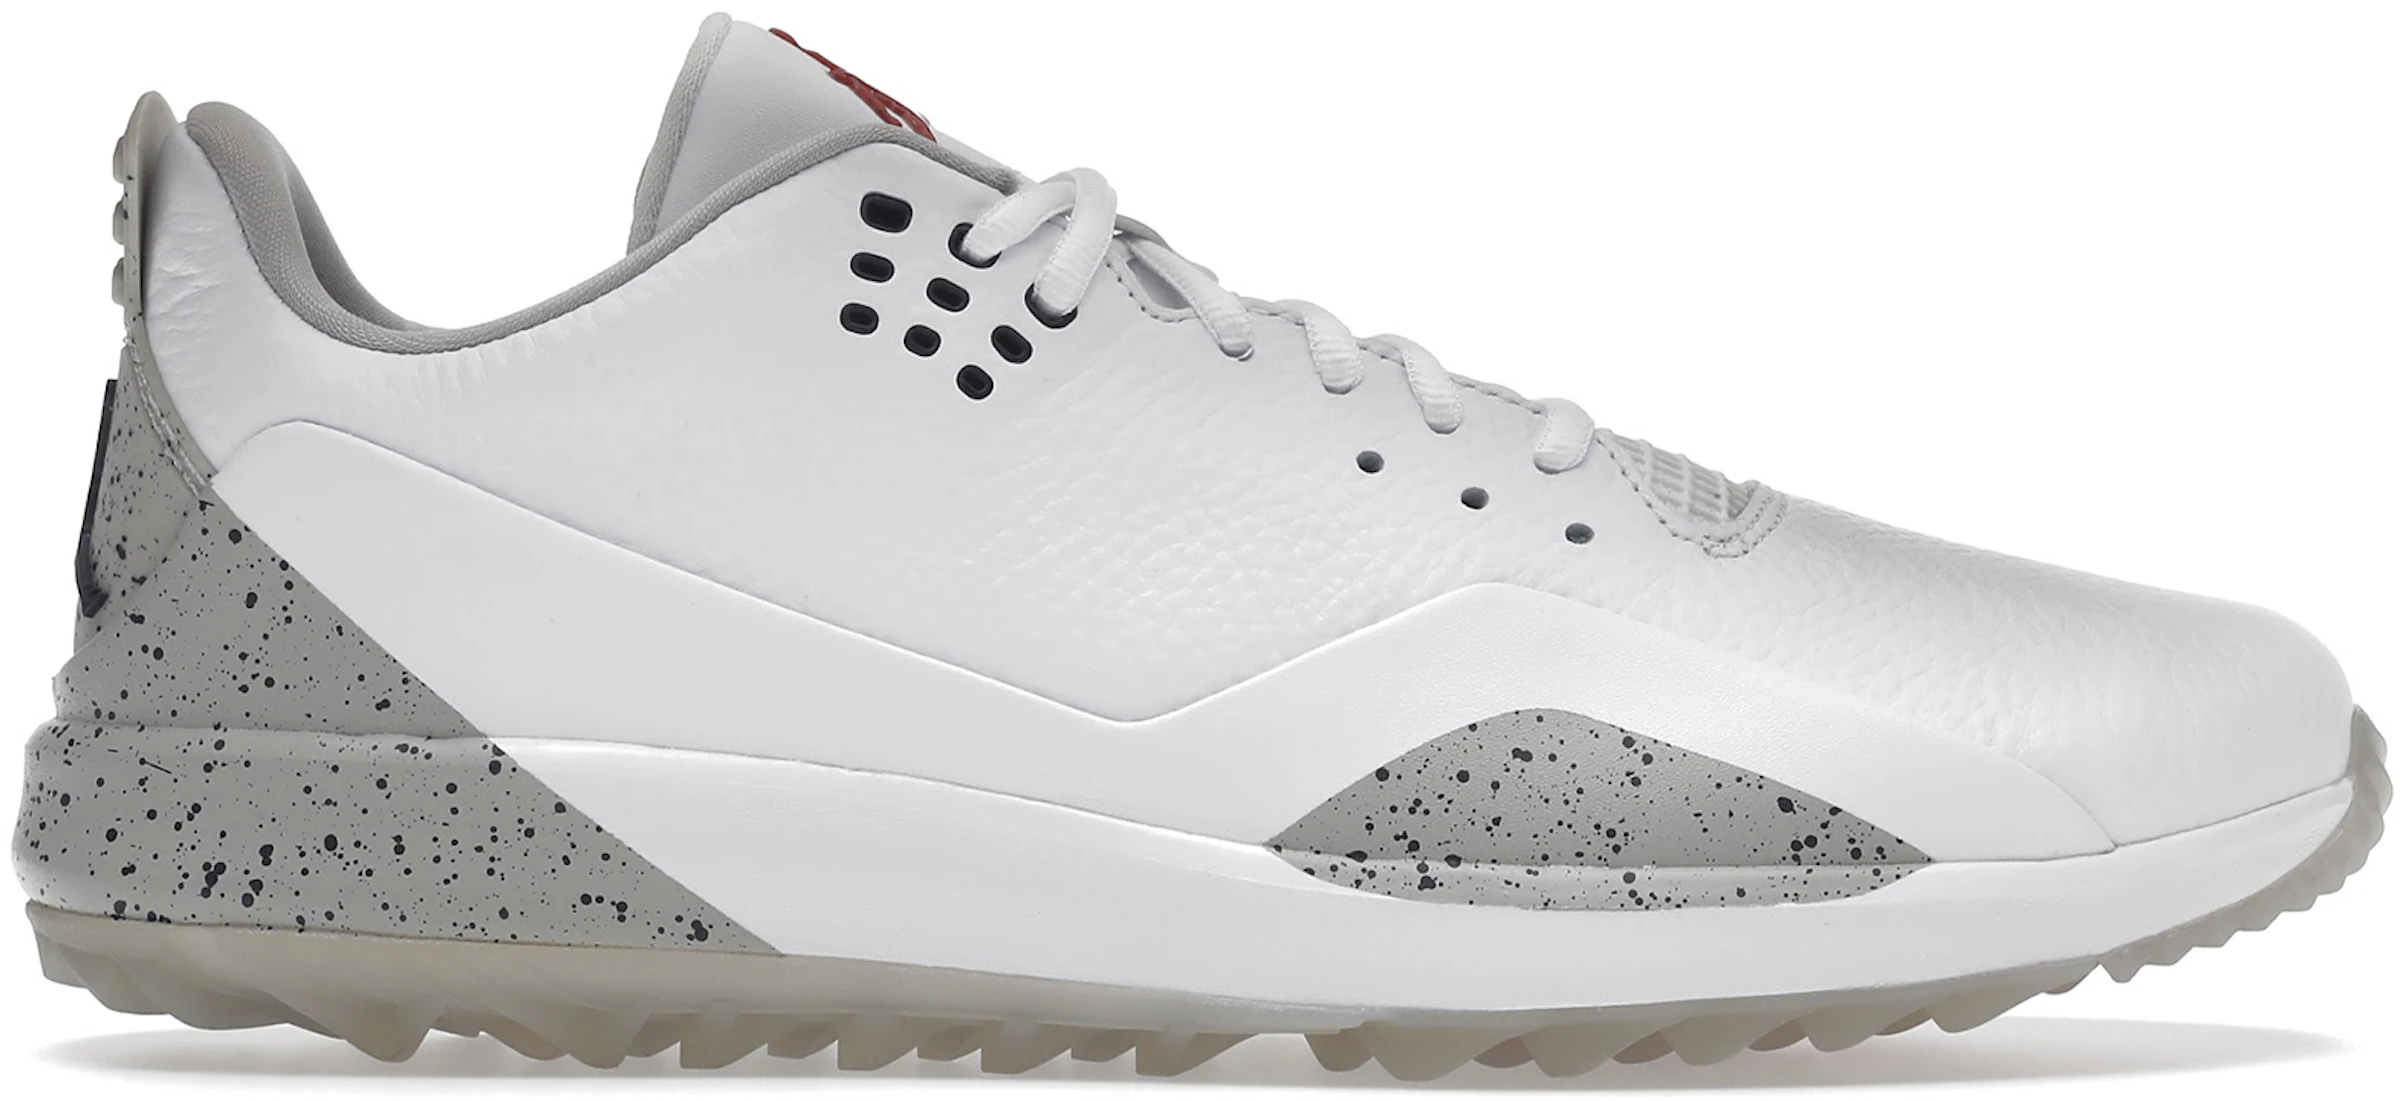 boliger forudsætning Opførsel Buy Air Jordan Golf Size 12.5 Shoes & New Sneakers - StockX